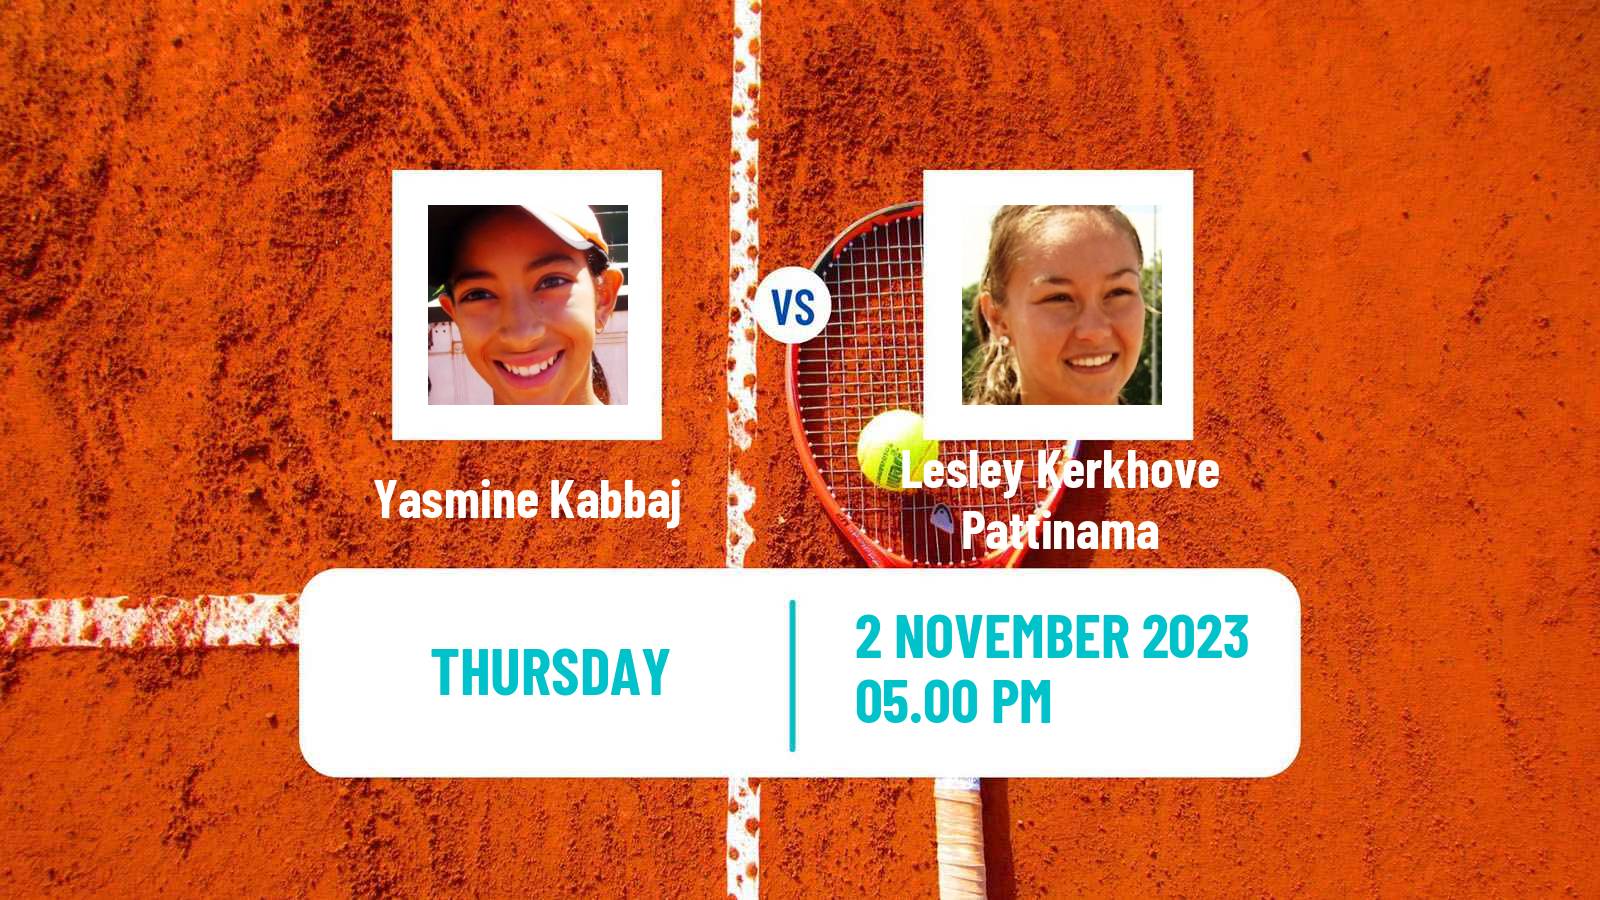 Tennis ITF W25 Edmonton Women Yasmine Kabbaj - Lesley Kerkhove Pattinama